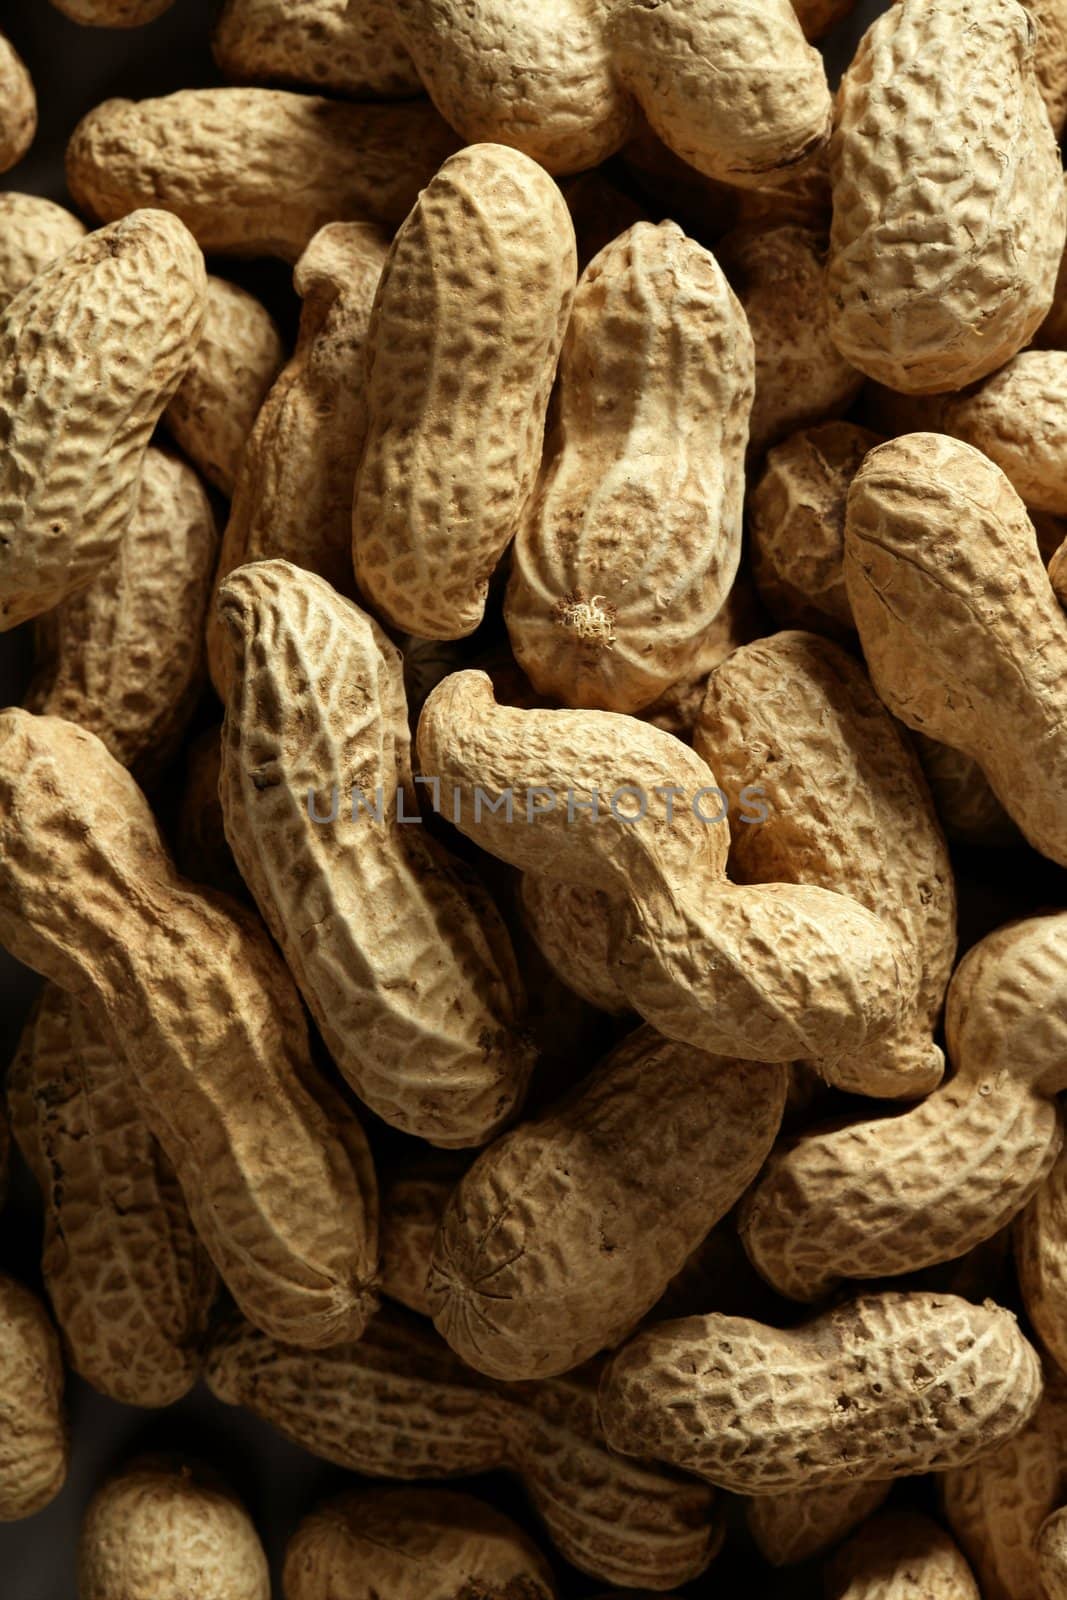 Peanuts macro over warm wood background